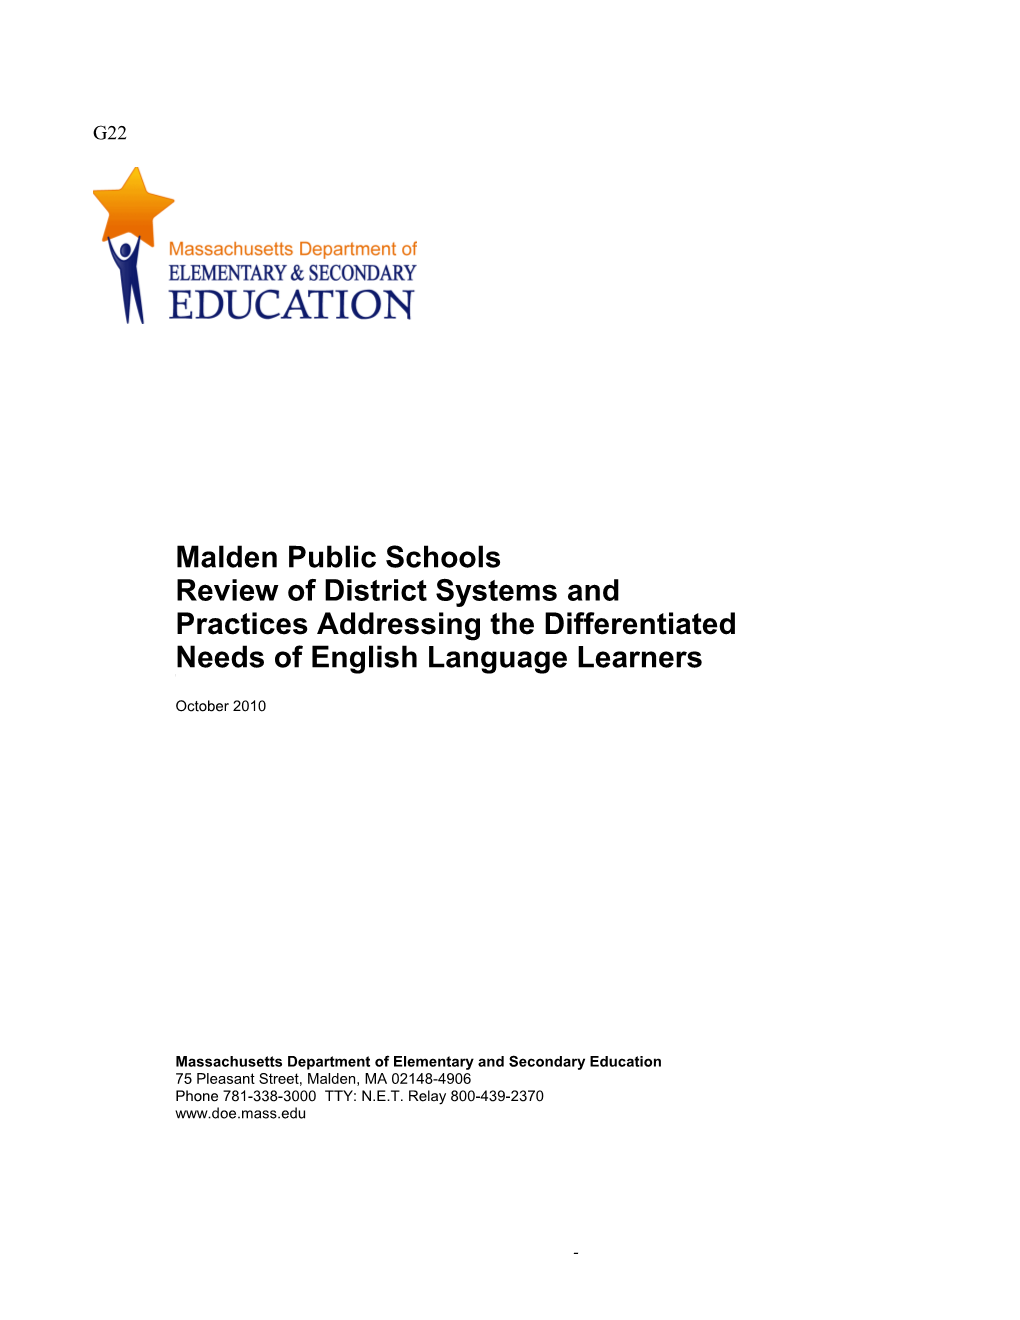 Malden Public Schools, Differentiated Needs (LEP) Review Report, October 2010